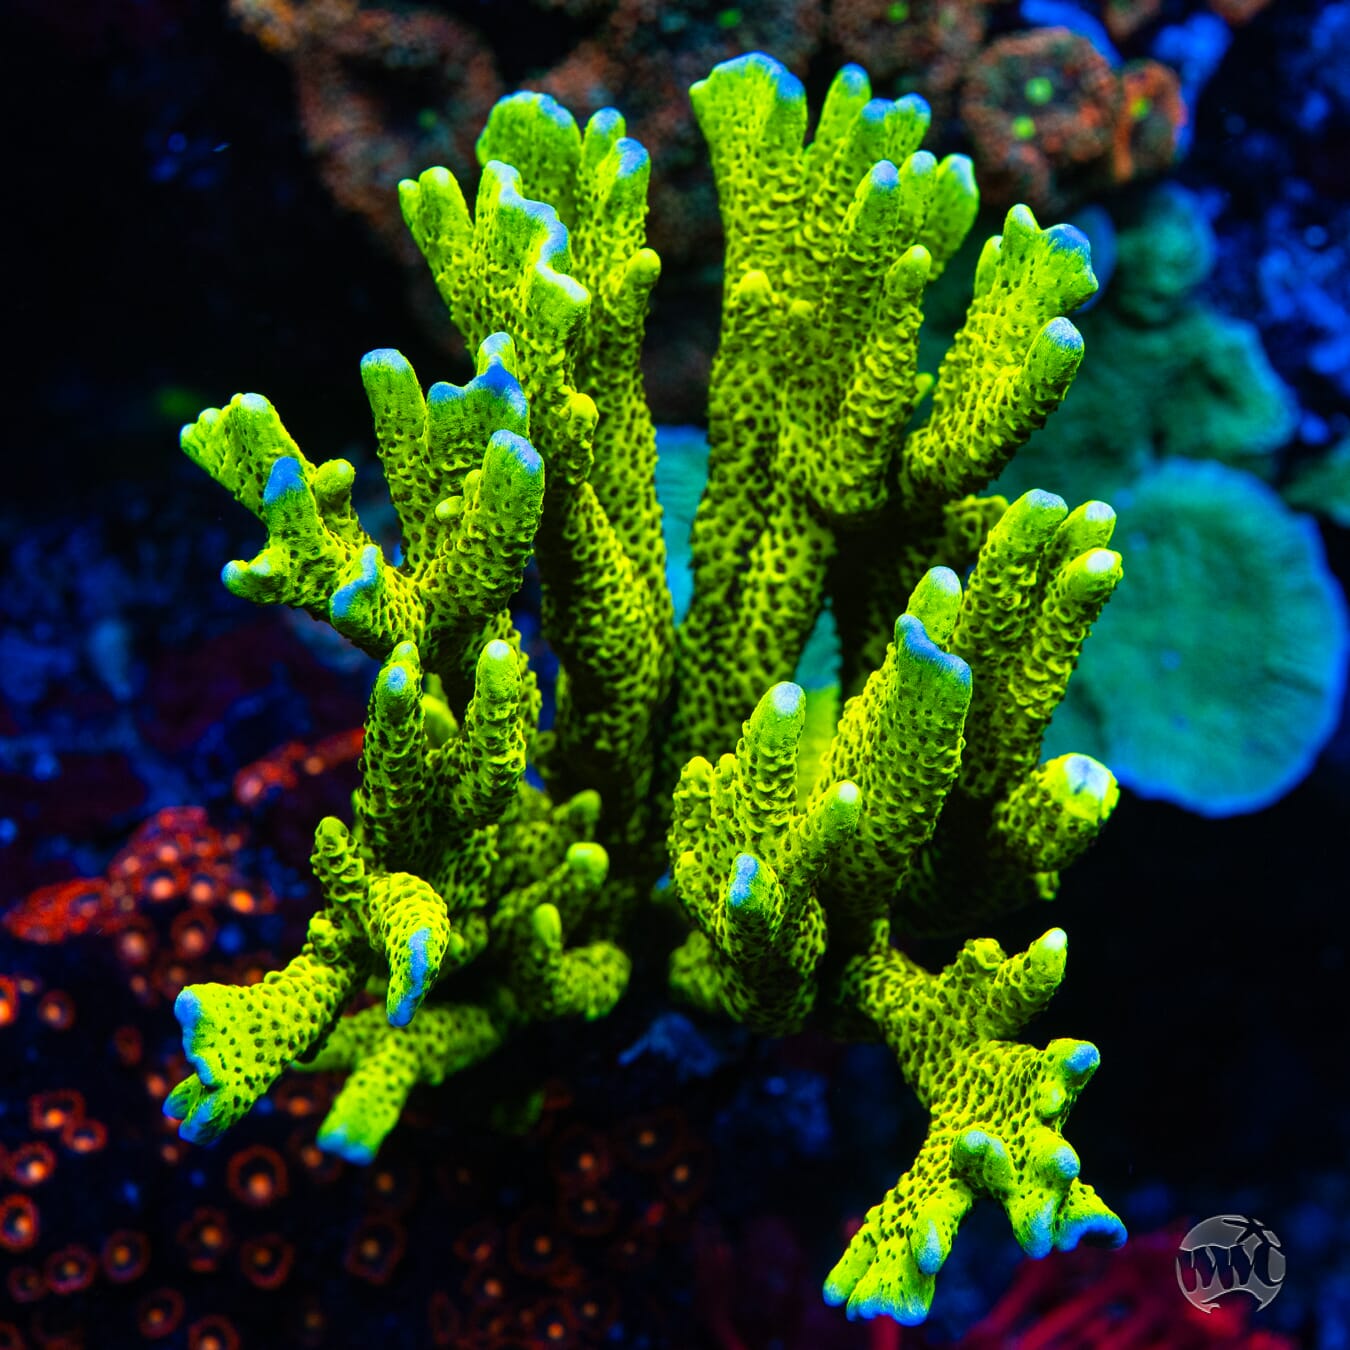 WWC Slimeball Spongodes Montipora Coral